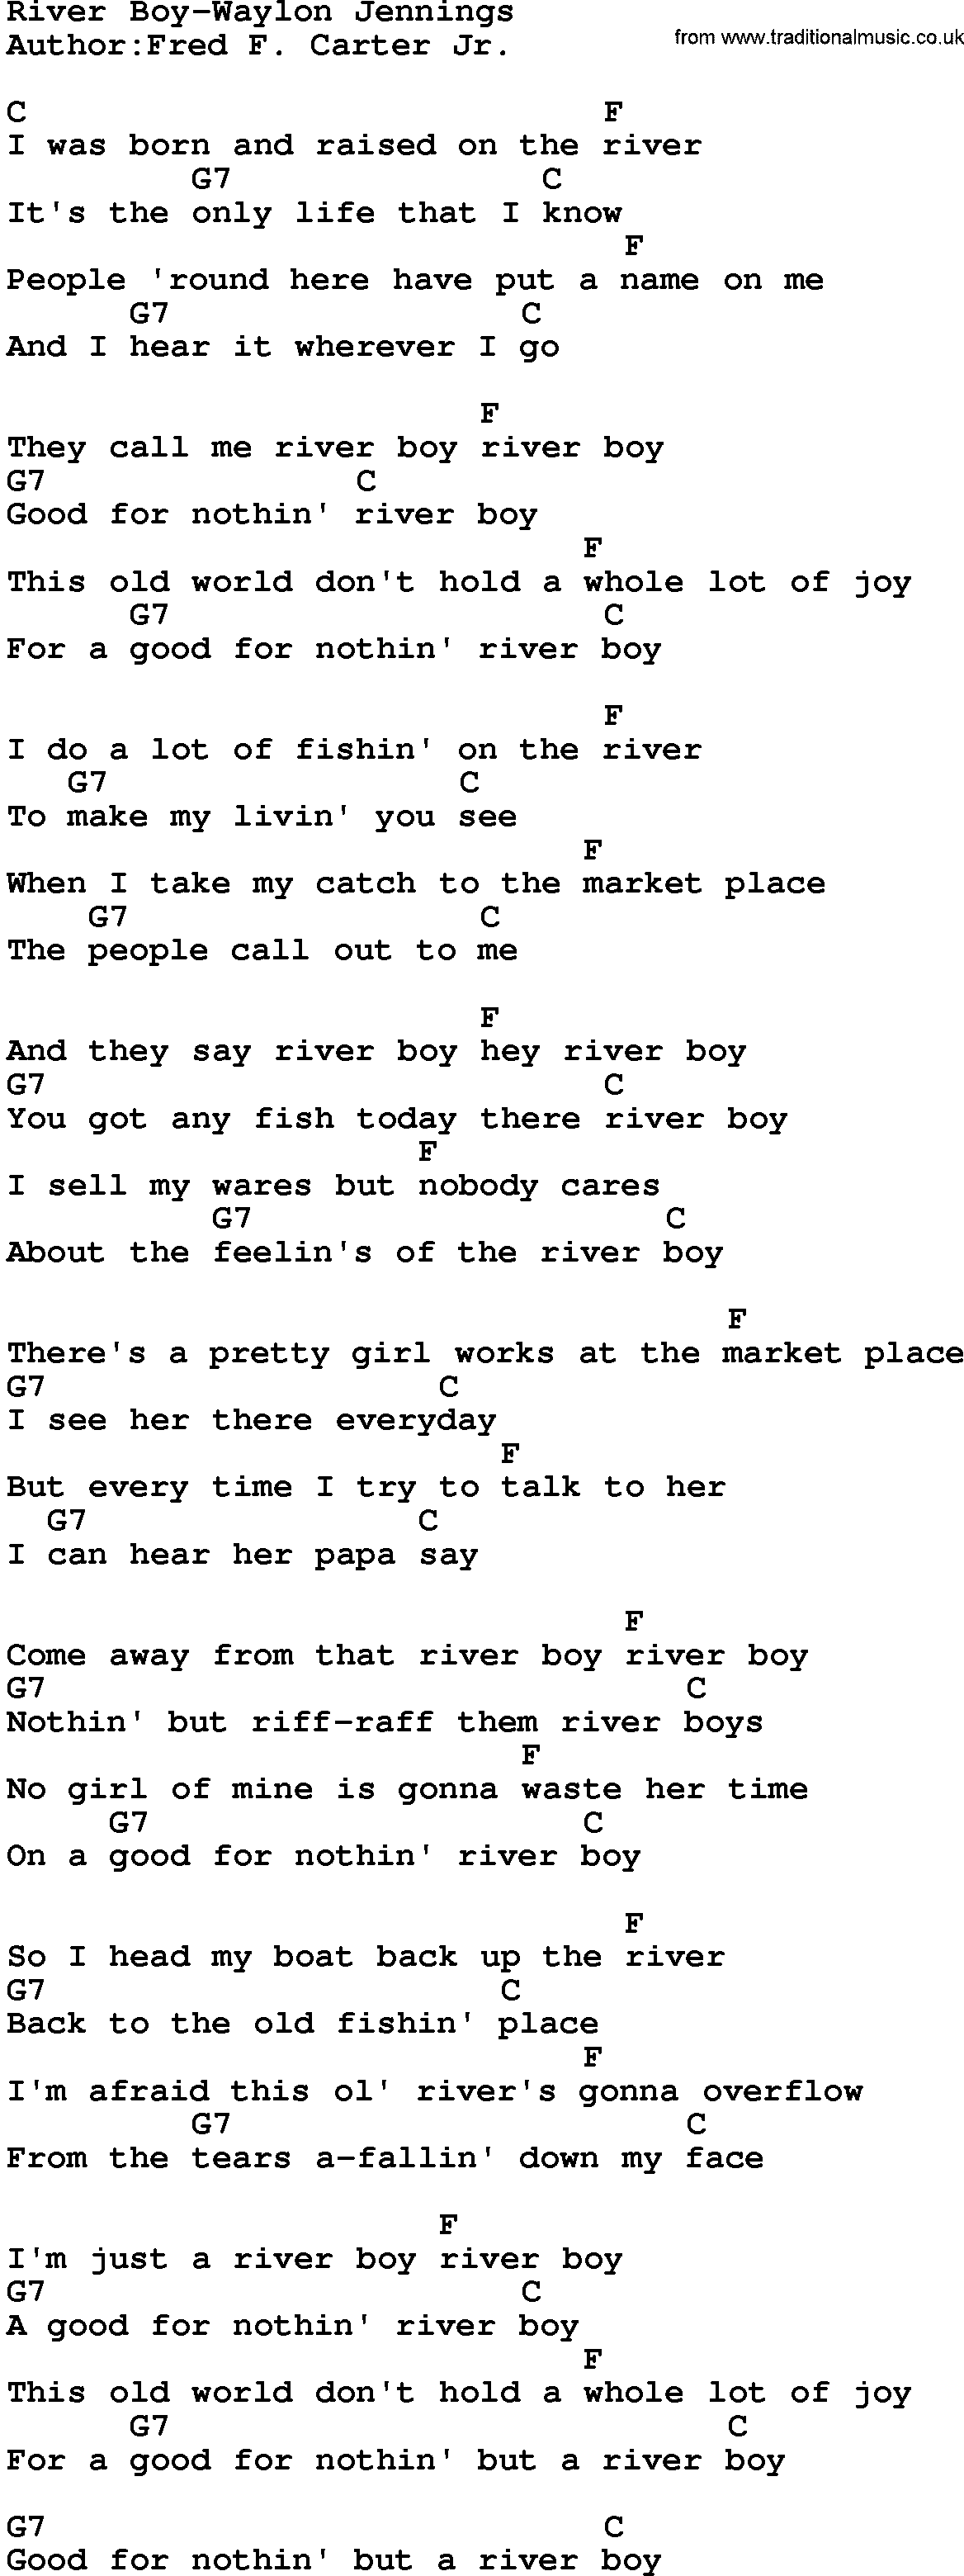 Country music song: River Boy-Waylon Jennings lyrics and chords